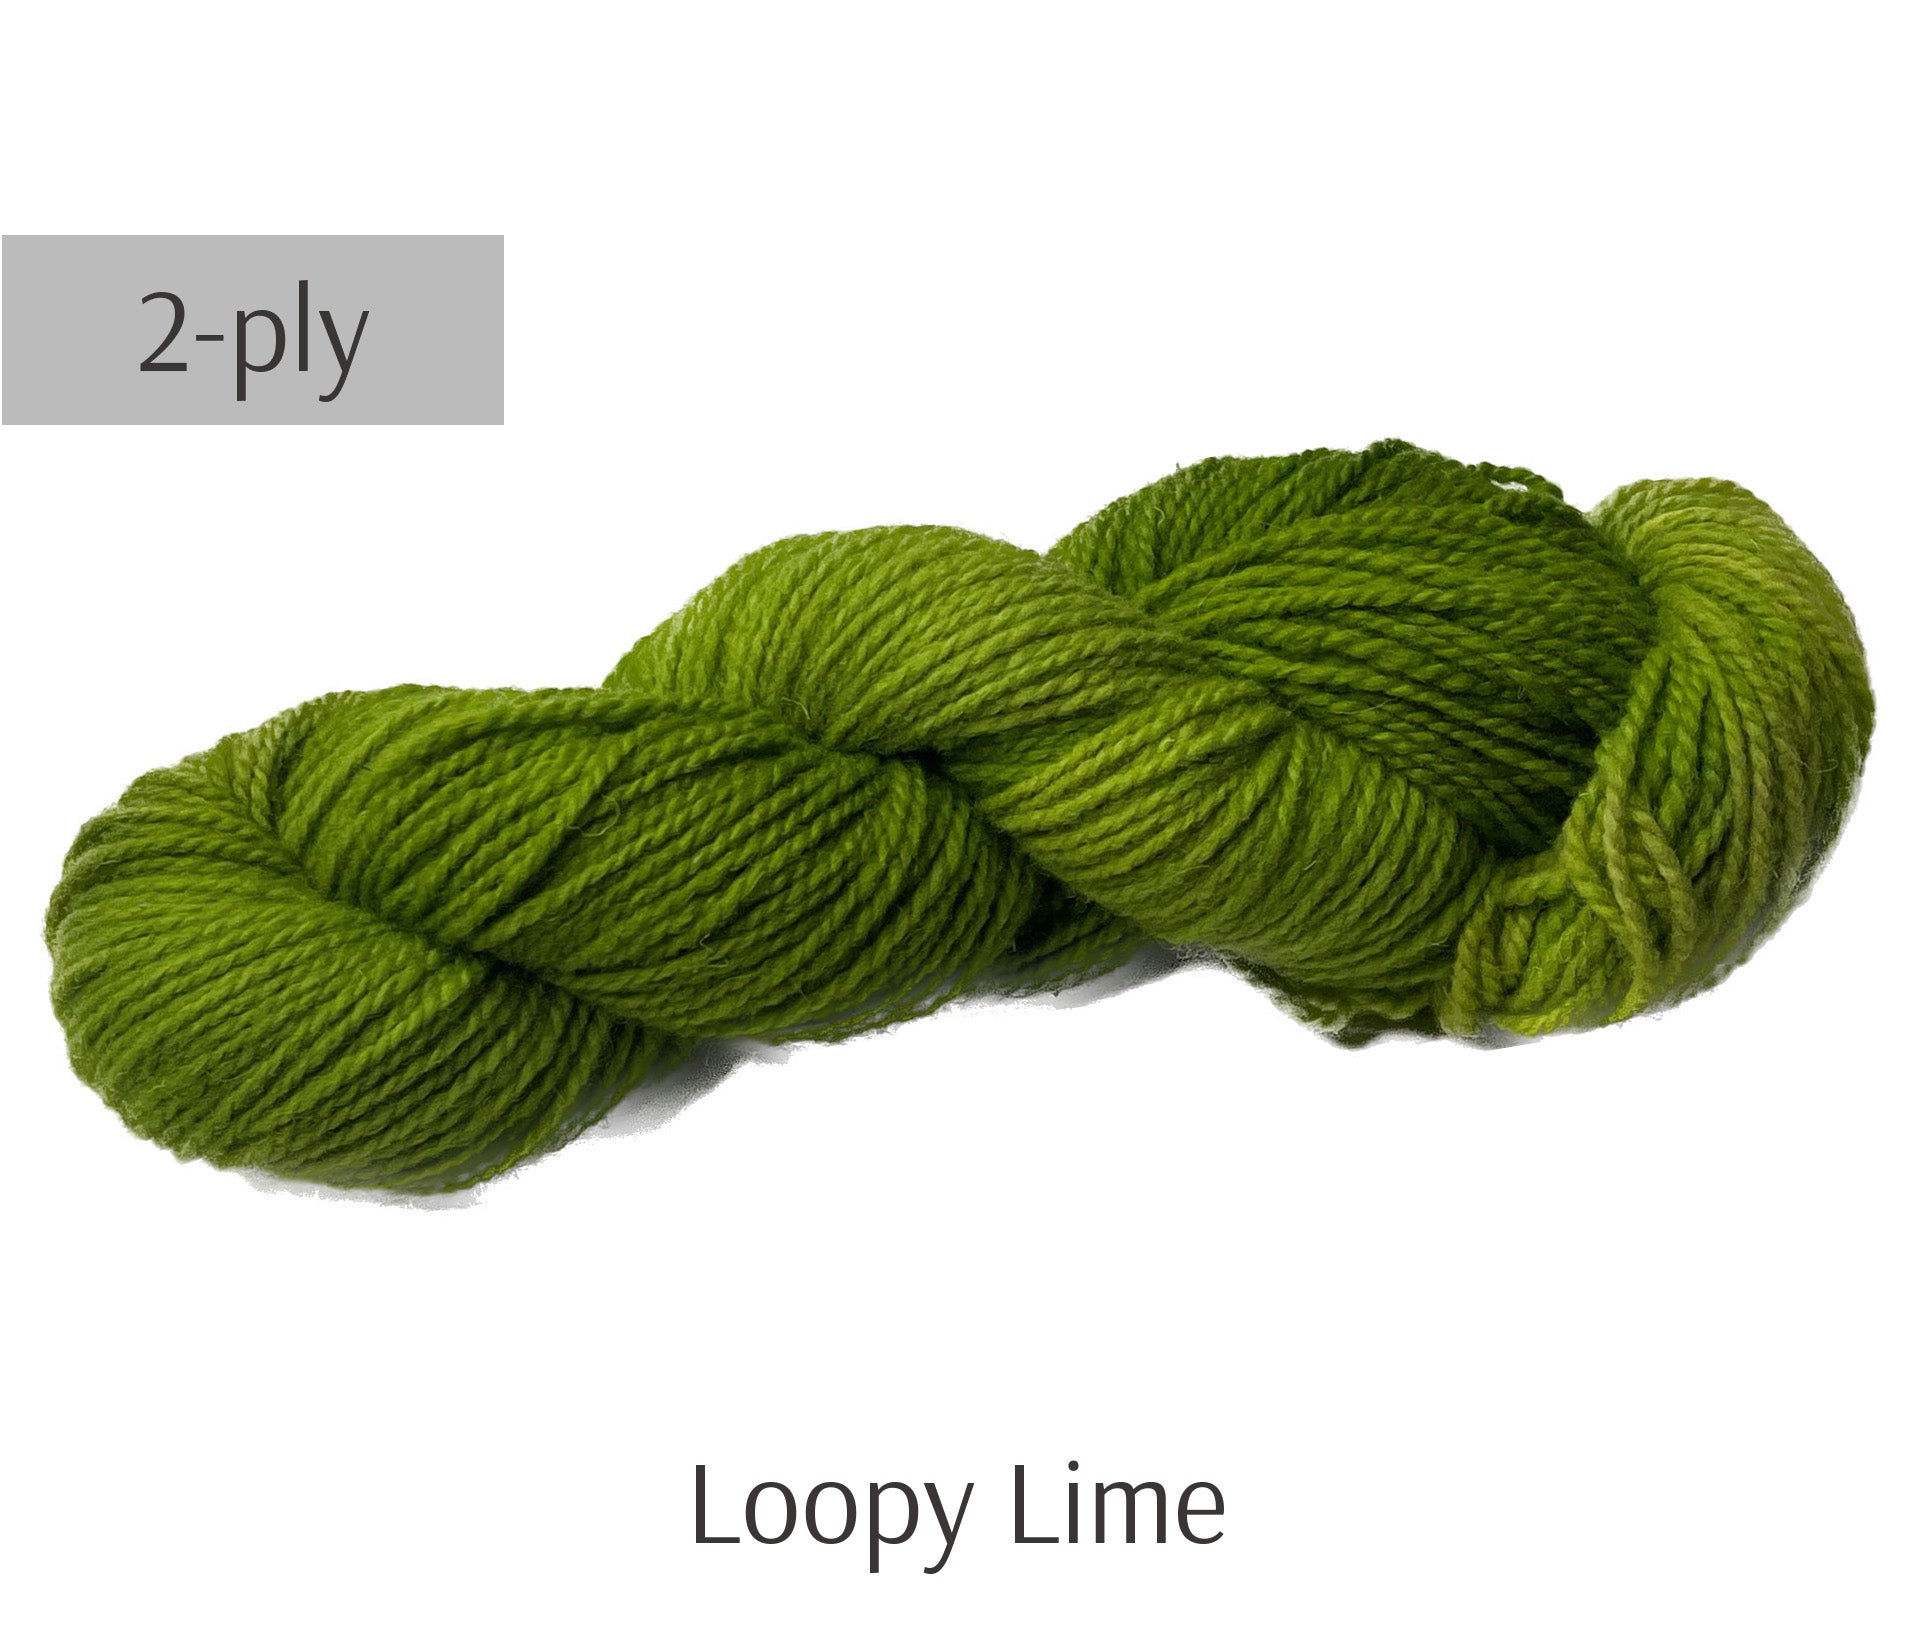 Loopy Lime 100% wool yarn